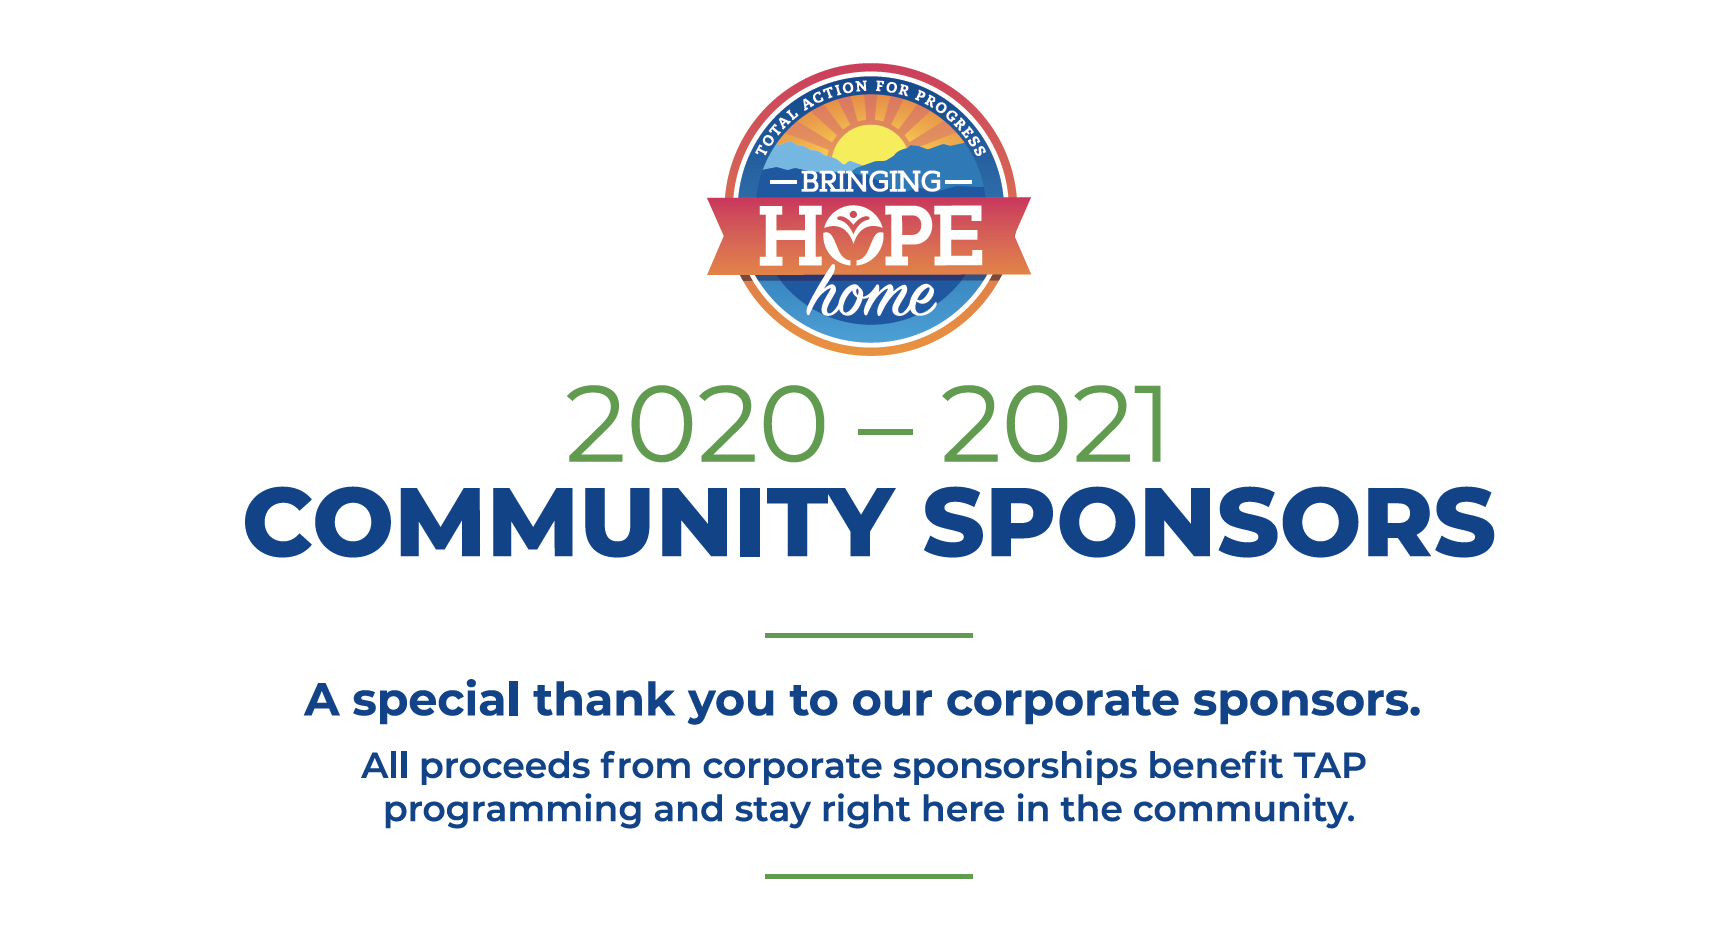 Bringing Hope Home community sponsors